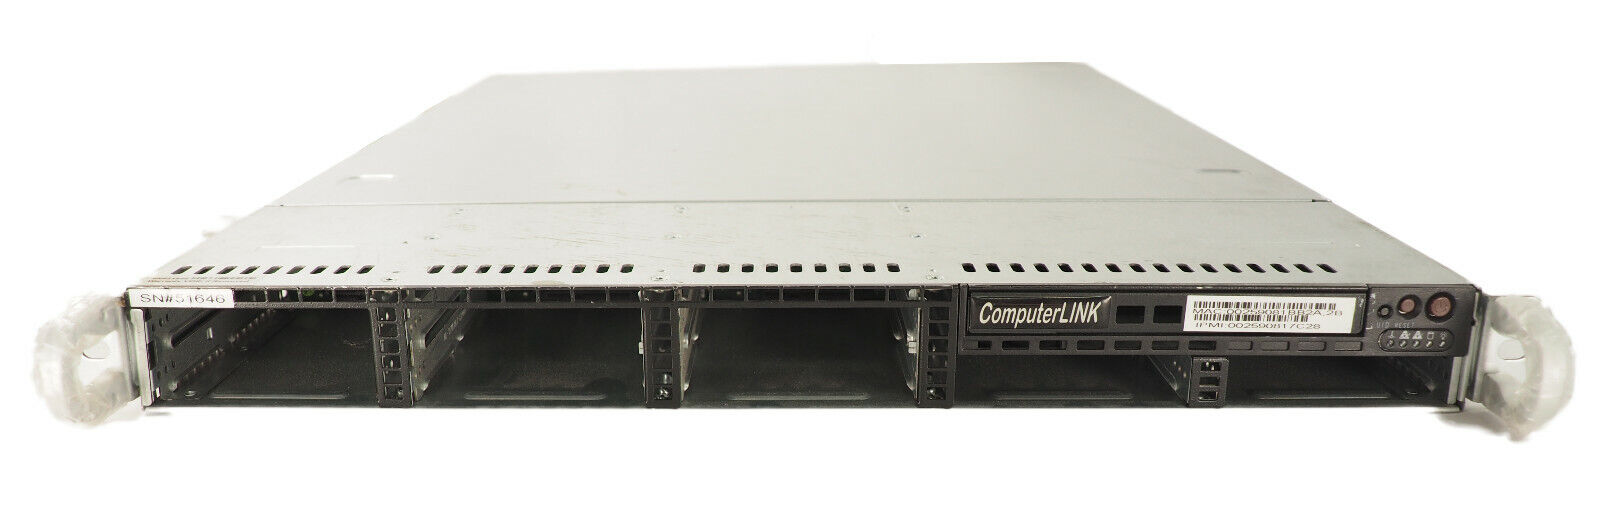 Supermicro Server ComputerLINK x2 Xeon E5645 2.40Ghz 52GB PC3-10600R (No Drives)